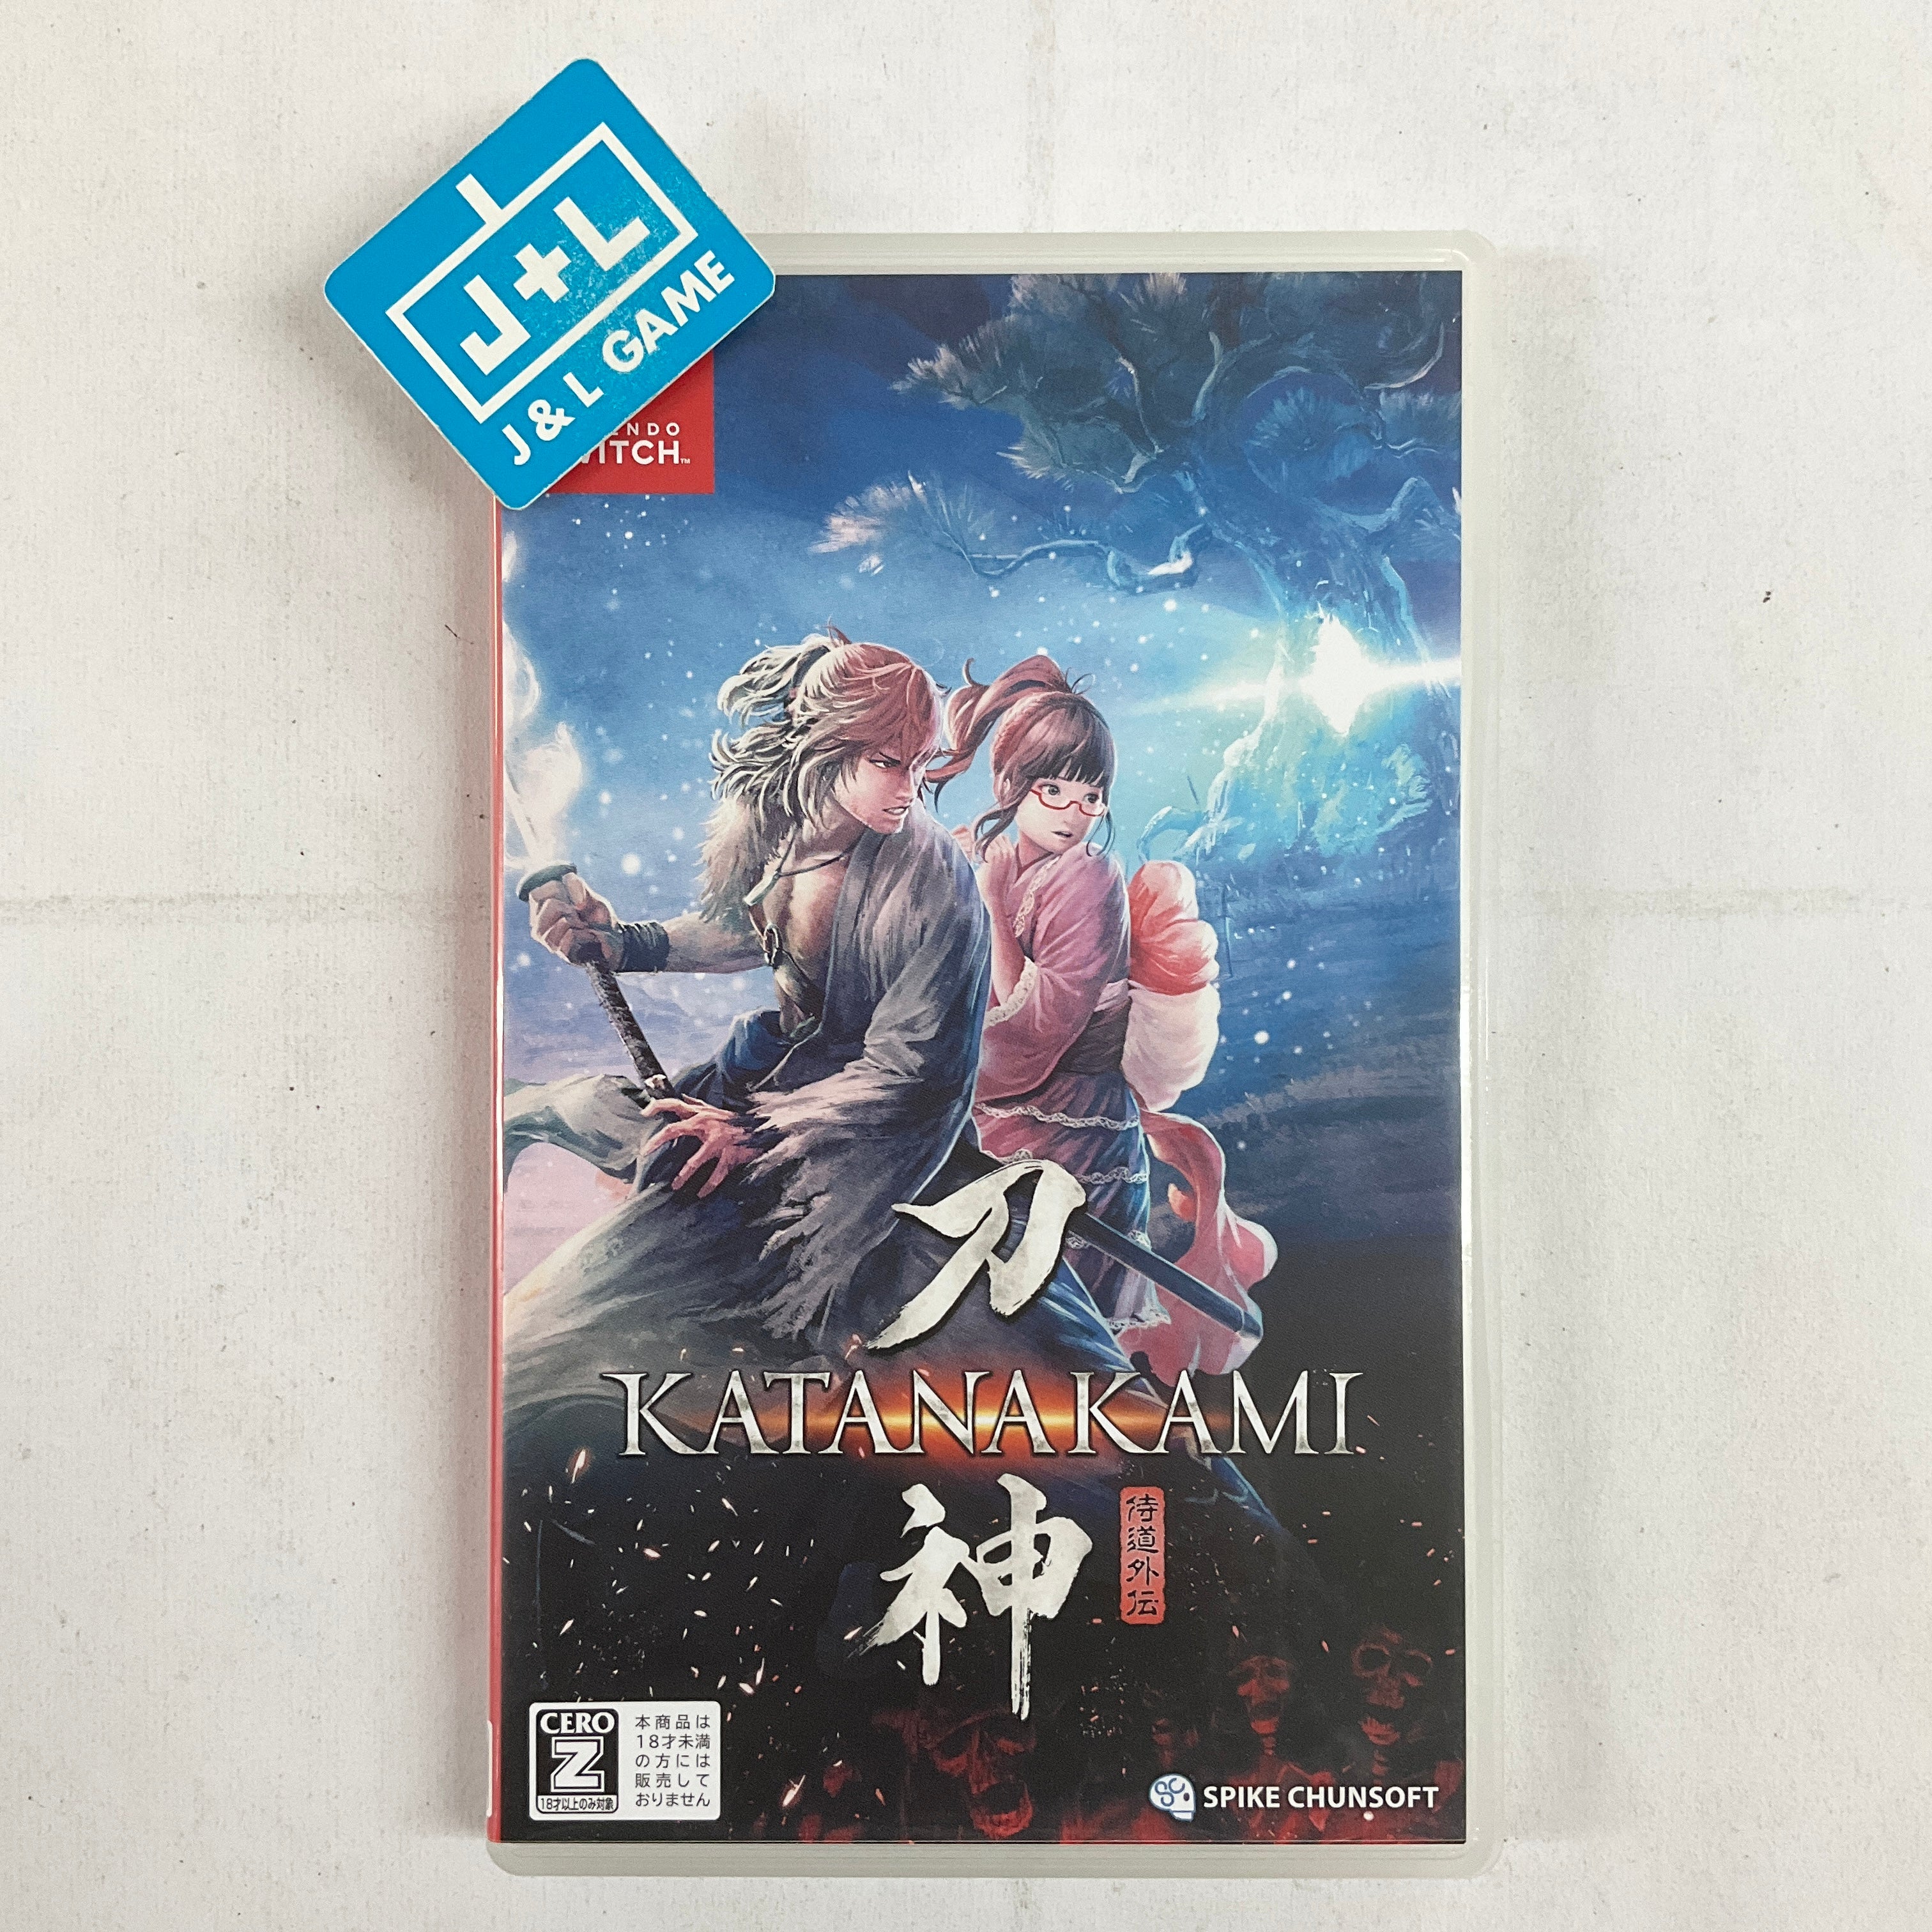 Katana Kami A Way Of The Samurai Story (English Subtitle) - (NSW) Nintendo Switch [Pre-Owned] (Japanese Import) Video Games Spike Chunsoft   